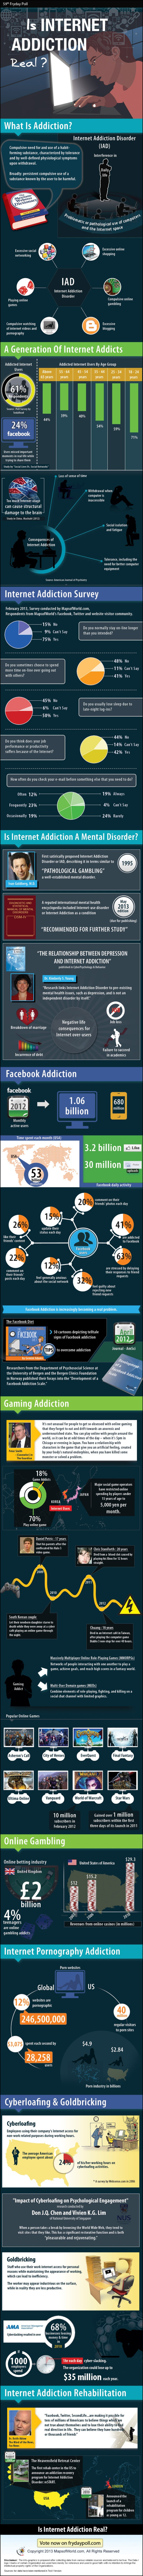 internet-addiction-facts-infographic (1)